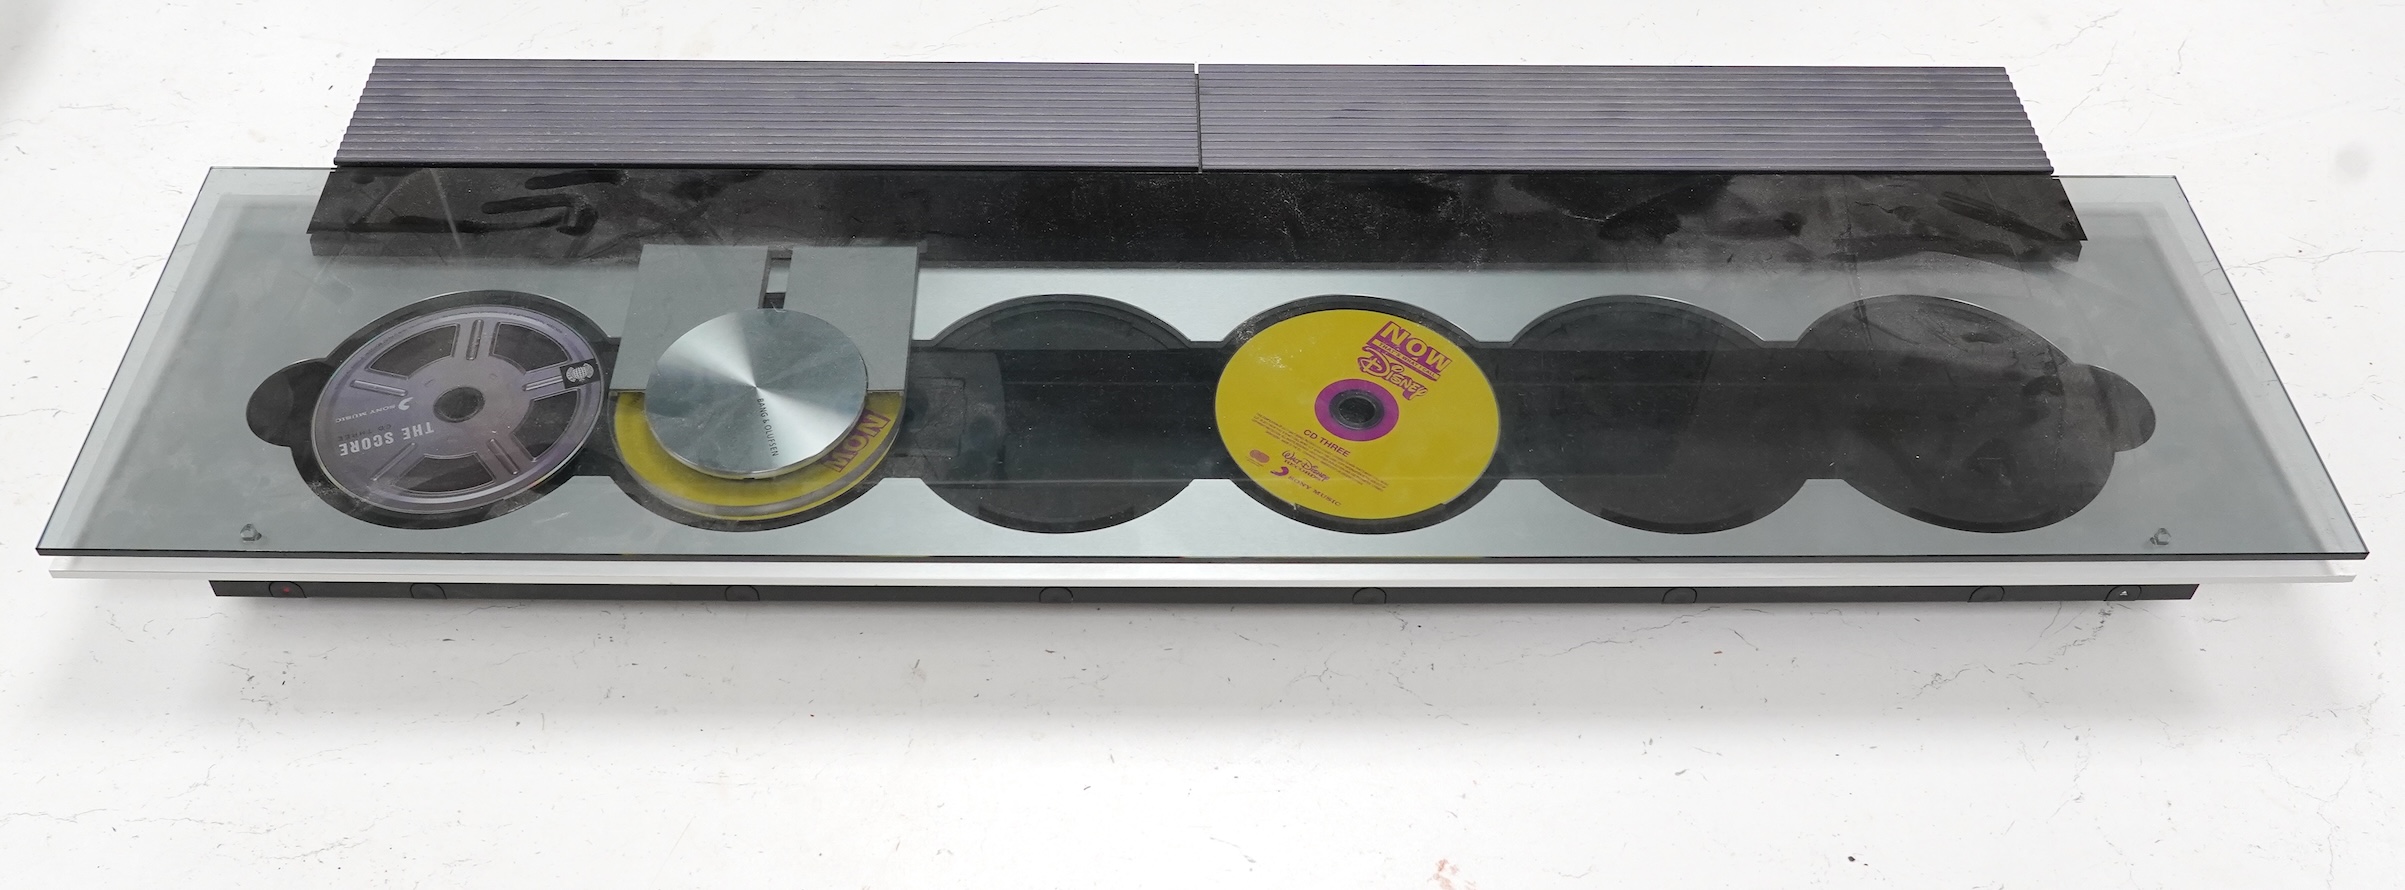 A Bang & Olufsen Beosound 9000 CD player, 90cm high